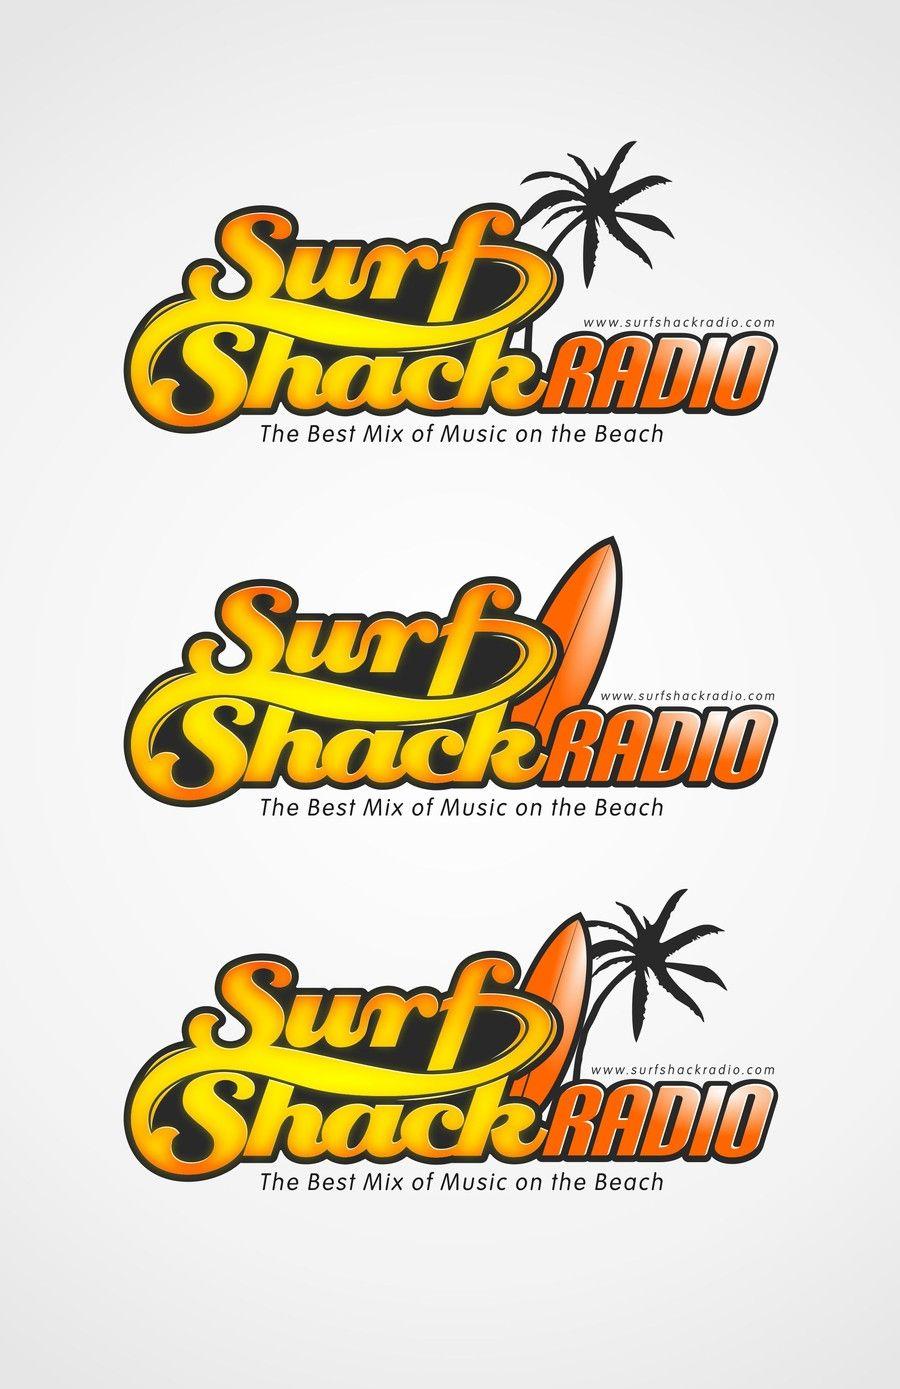 Surf Shack Logo - Entry #190 by Iddisurz for Design a Logo for Surf Shack Radio ...